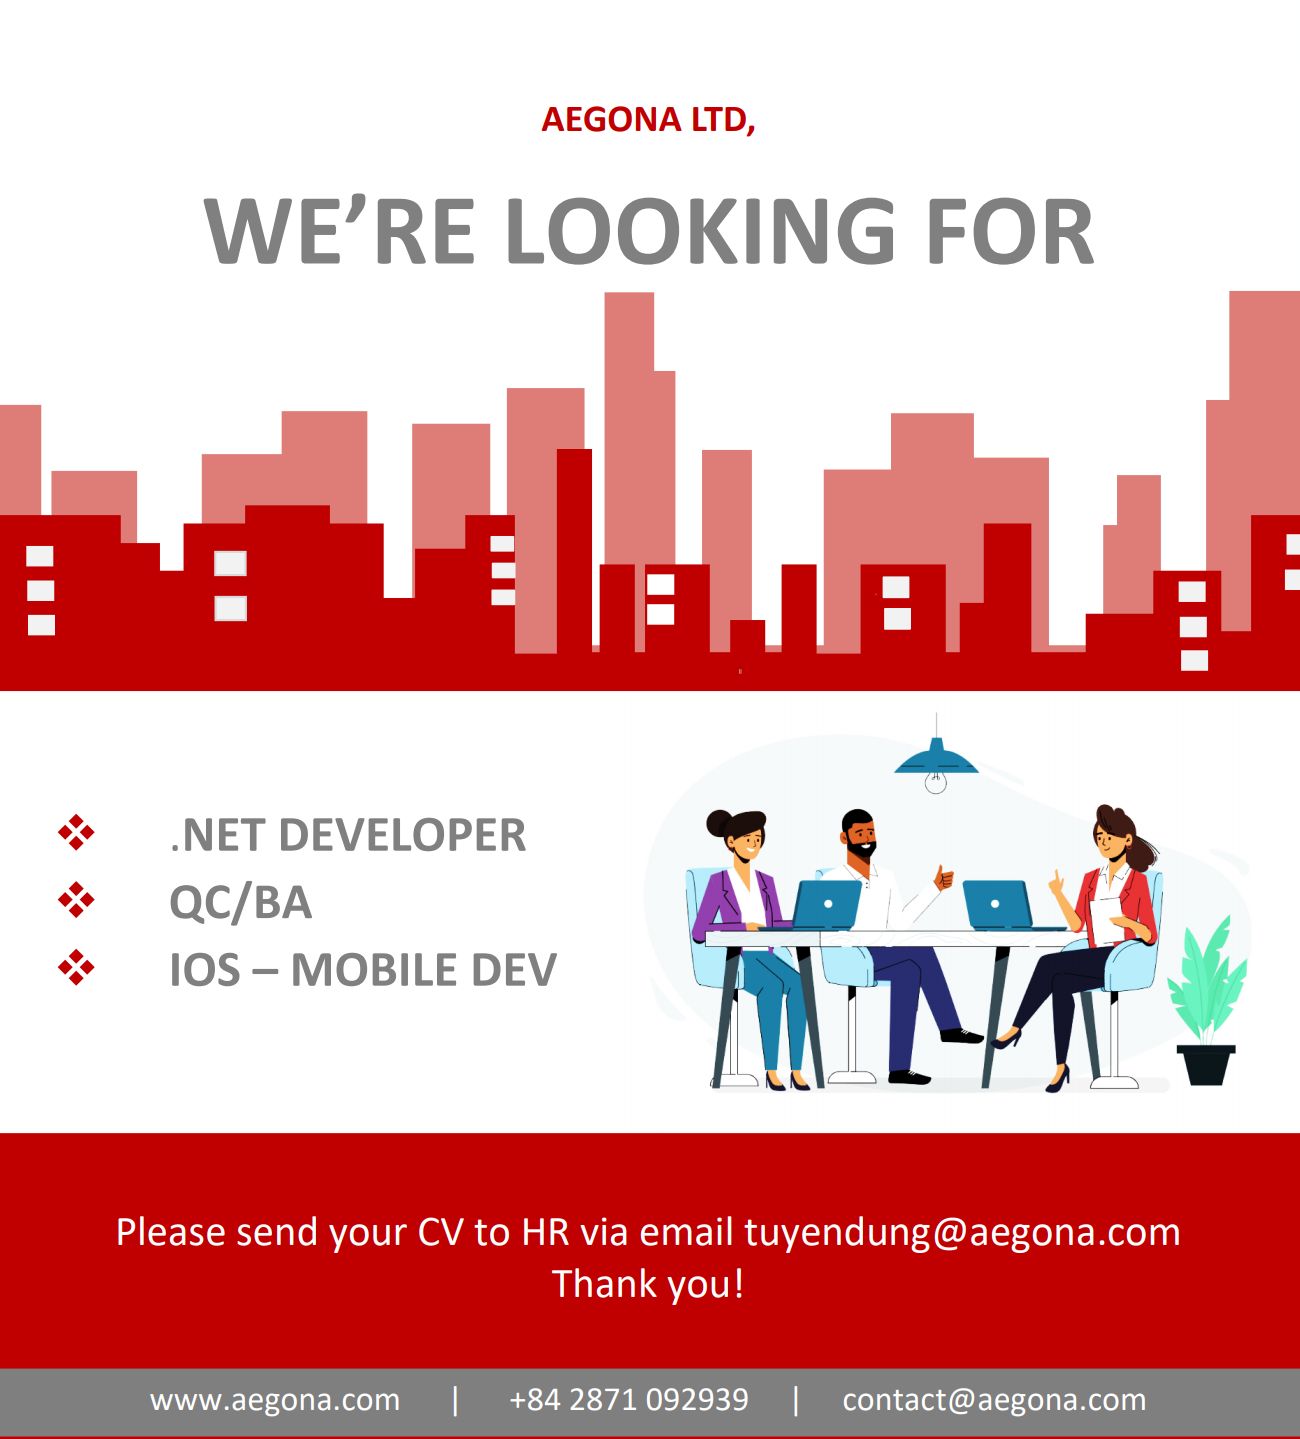 Job opportunities at Aegona